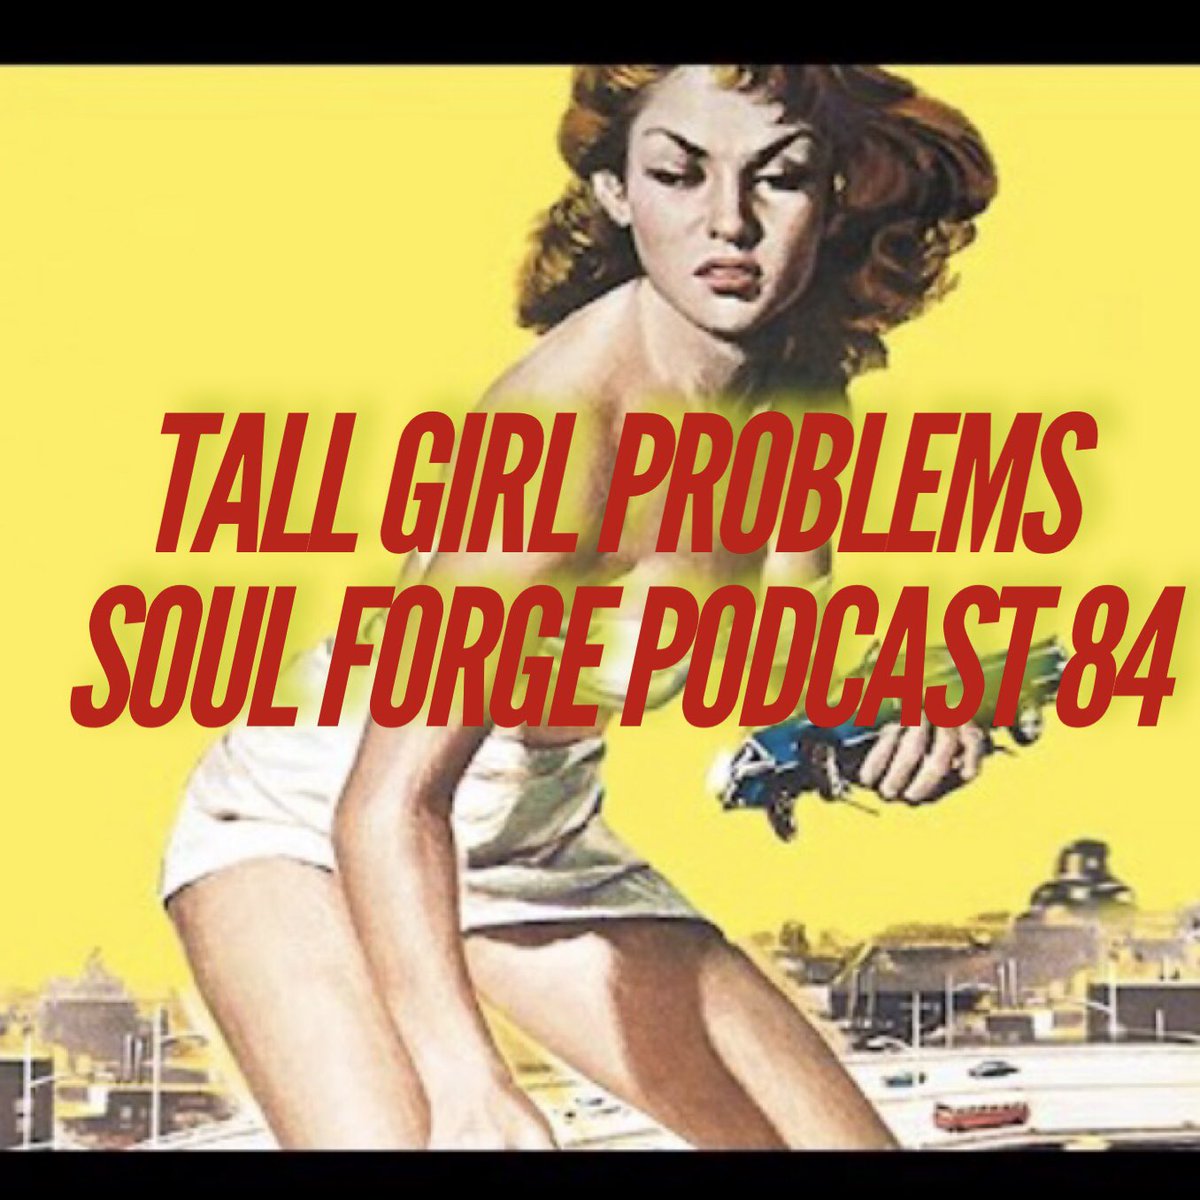 SOUL FORGE PODCAST #84: Tall Girl Problems - podbean.com/media/share/pb… #ThePWA #PodernFamily #podsunited #podcasting #PodcastPlug #podcasthq #podcast #TallGirlTwitter #girl #underdogpods #podgenie #podknife #bigandtall #height #girlpower #sexy